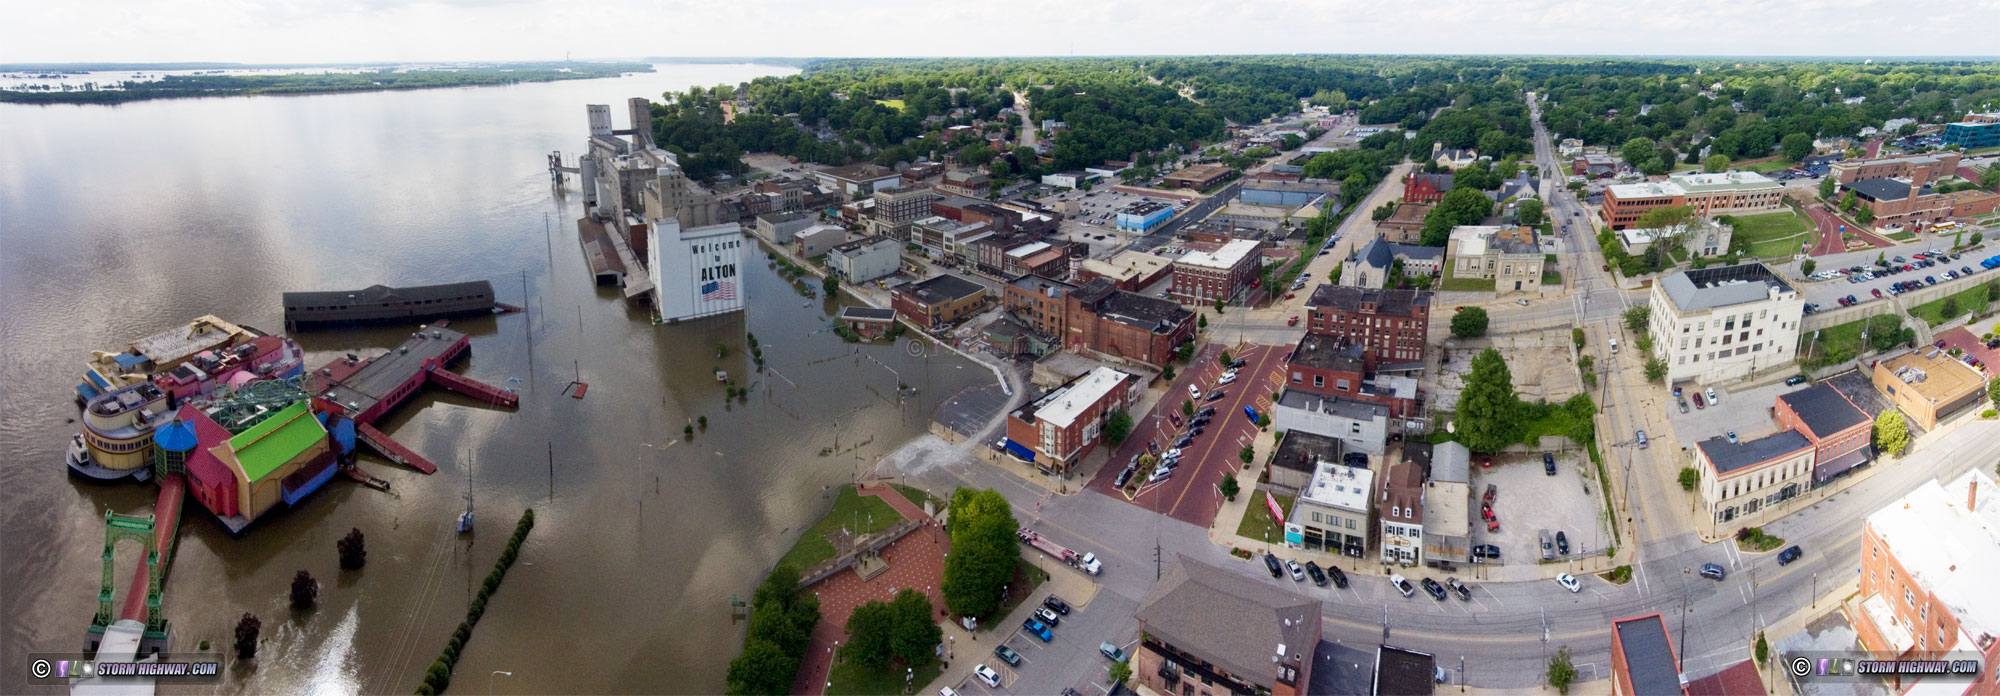 Alton, IL flood 2019